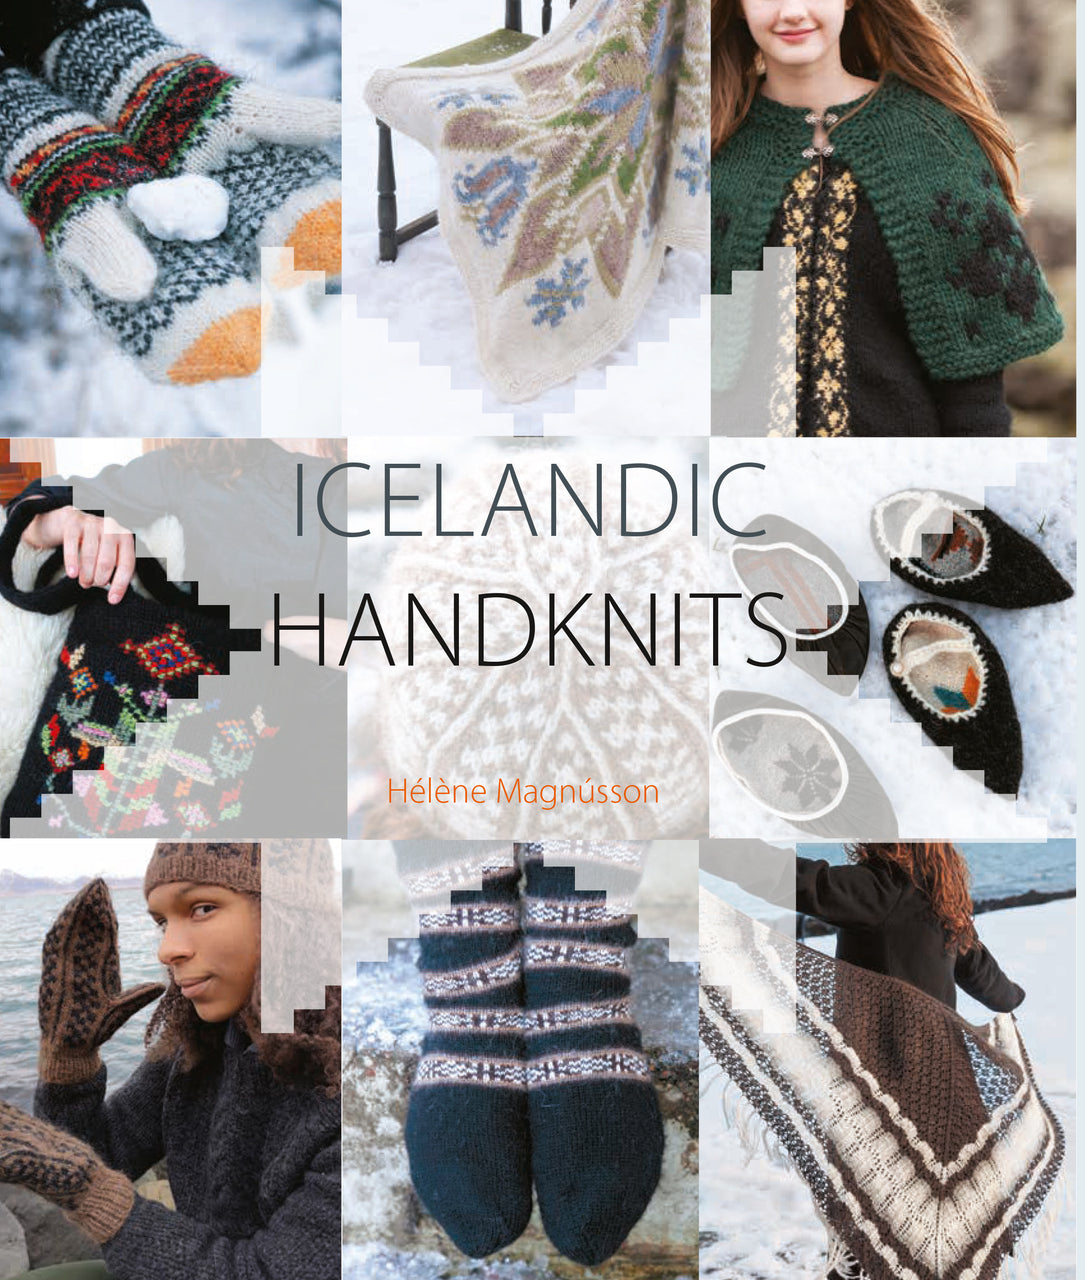 Icelandic Handknits Knitting Pattern Book by Helene Magnusson of Prjonakerling ehf